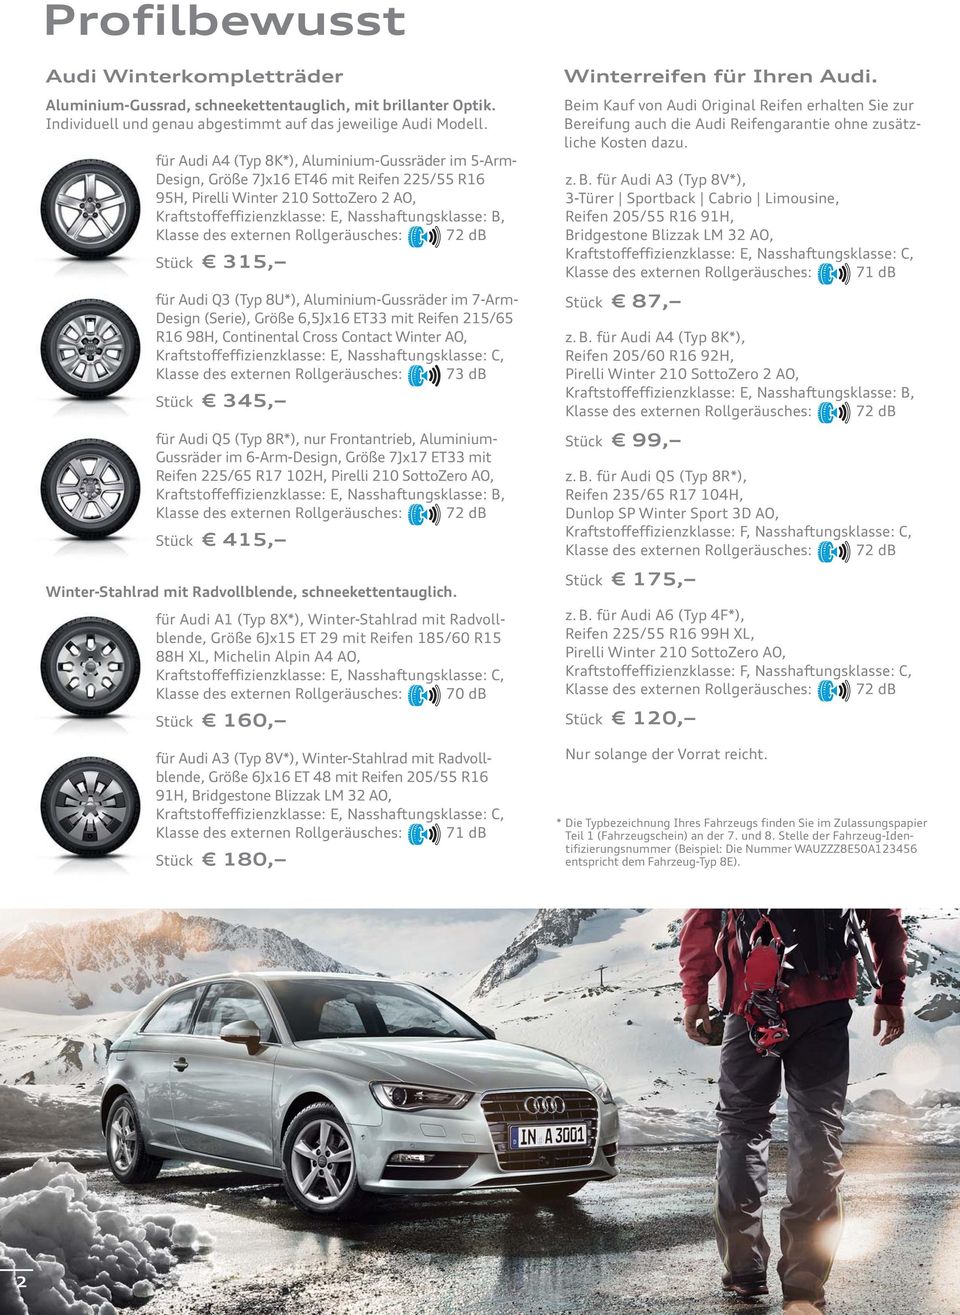 Audi Q3 (Typ 8U*), Aluminium-Gussräder im 7-Arm- Design (Serie), Größe 6,5Jx16 ET33 mit Reifen 215/65 R16 98H, Continental Cross Contact Winter AO, Kraftstoffeffizienzklasse: E, Nasshaftungsklasse: